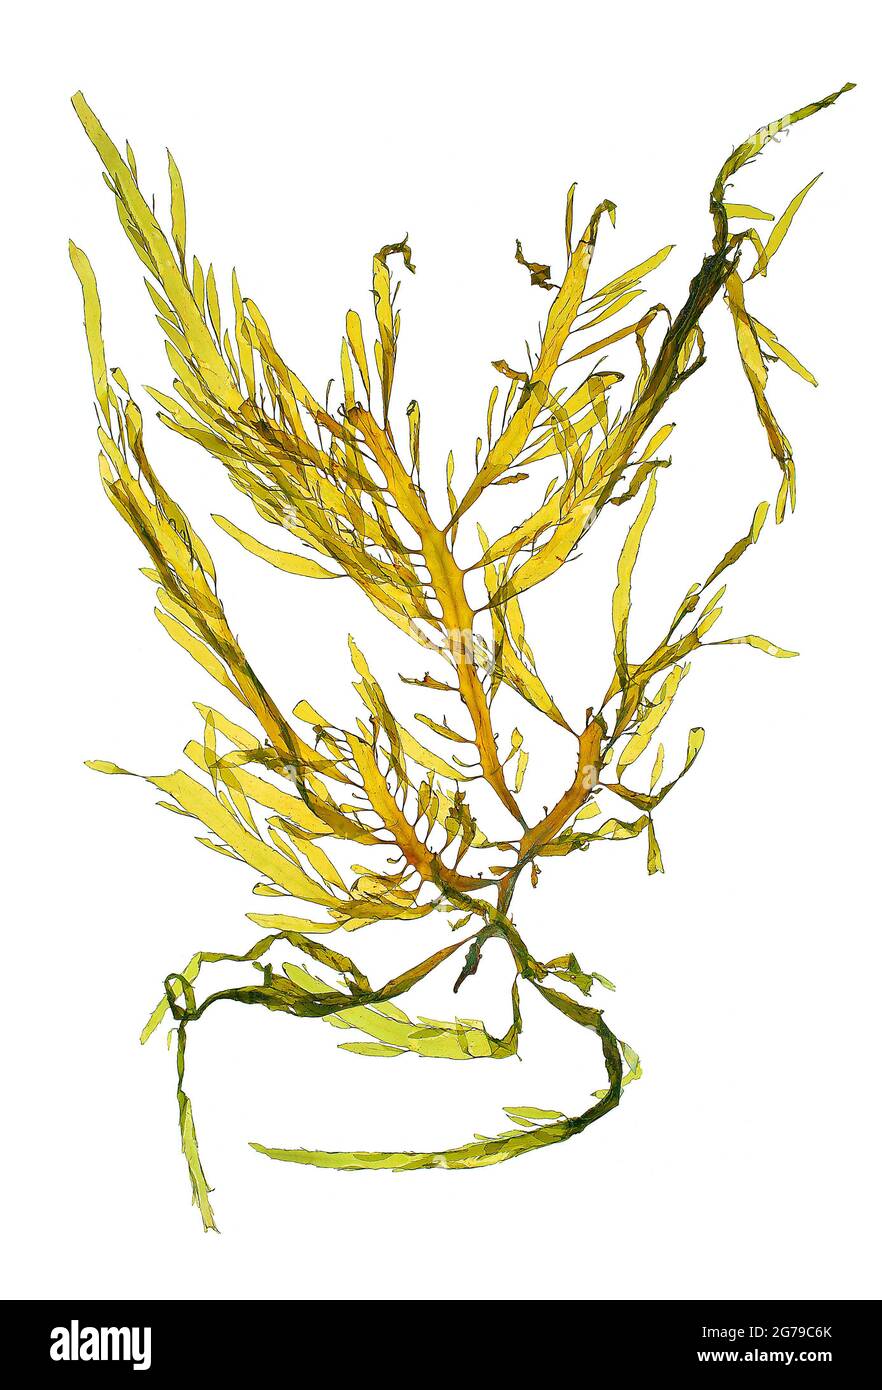 Desmarestia ligulata (Stackhouse) JVLamouroux, alga marrone (Phaeophyceae) Foto Stock